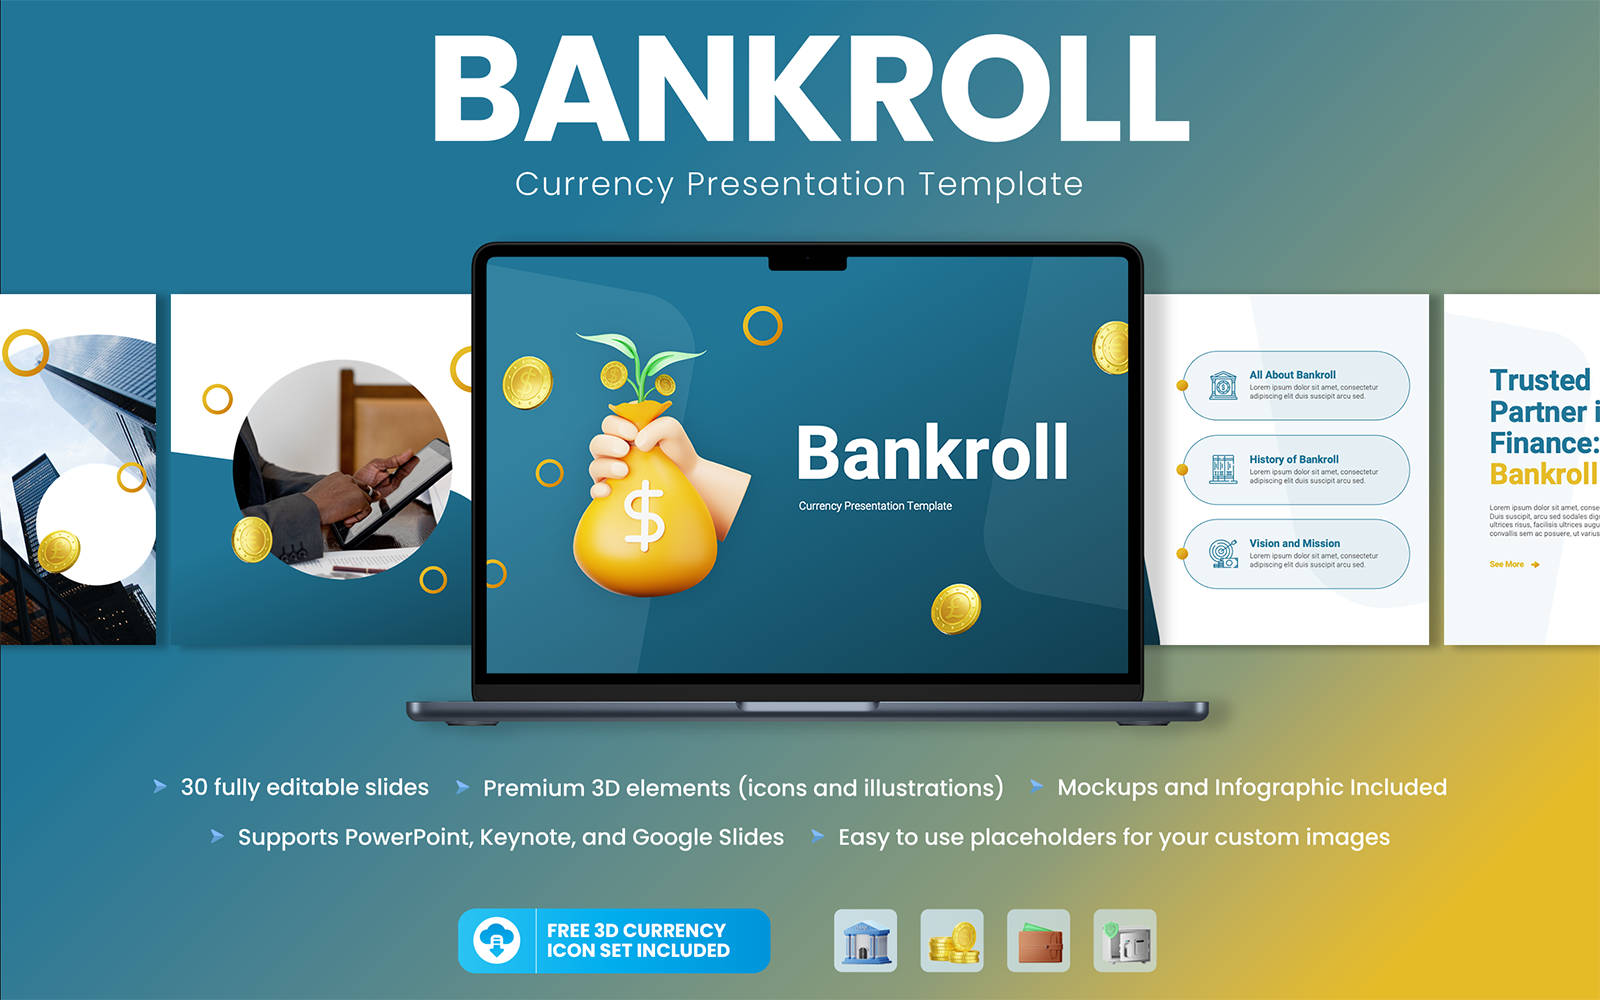 Bankroll – Currency Presentation